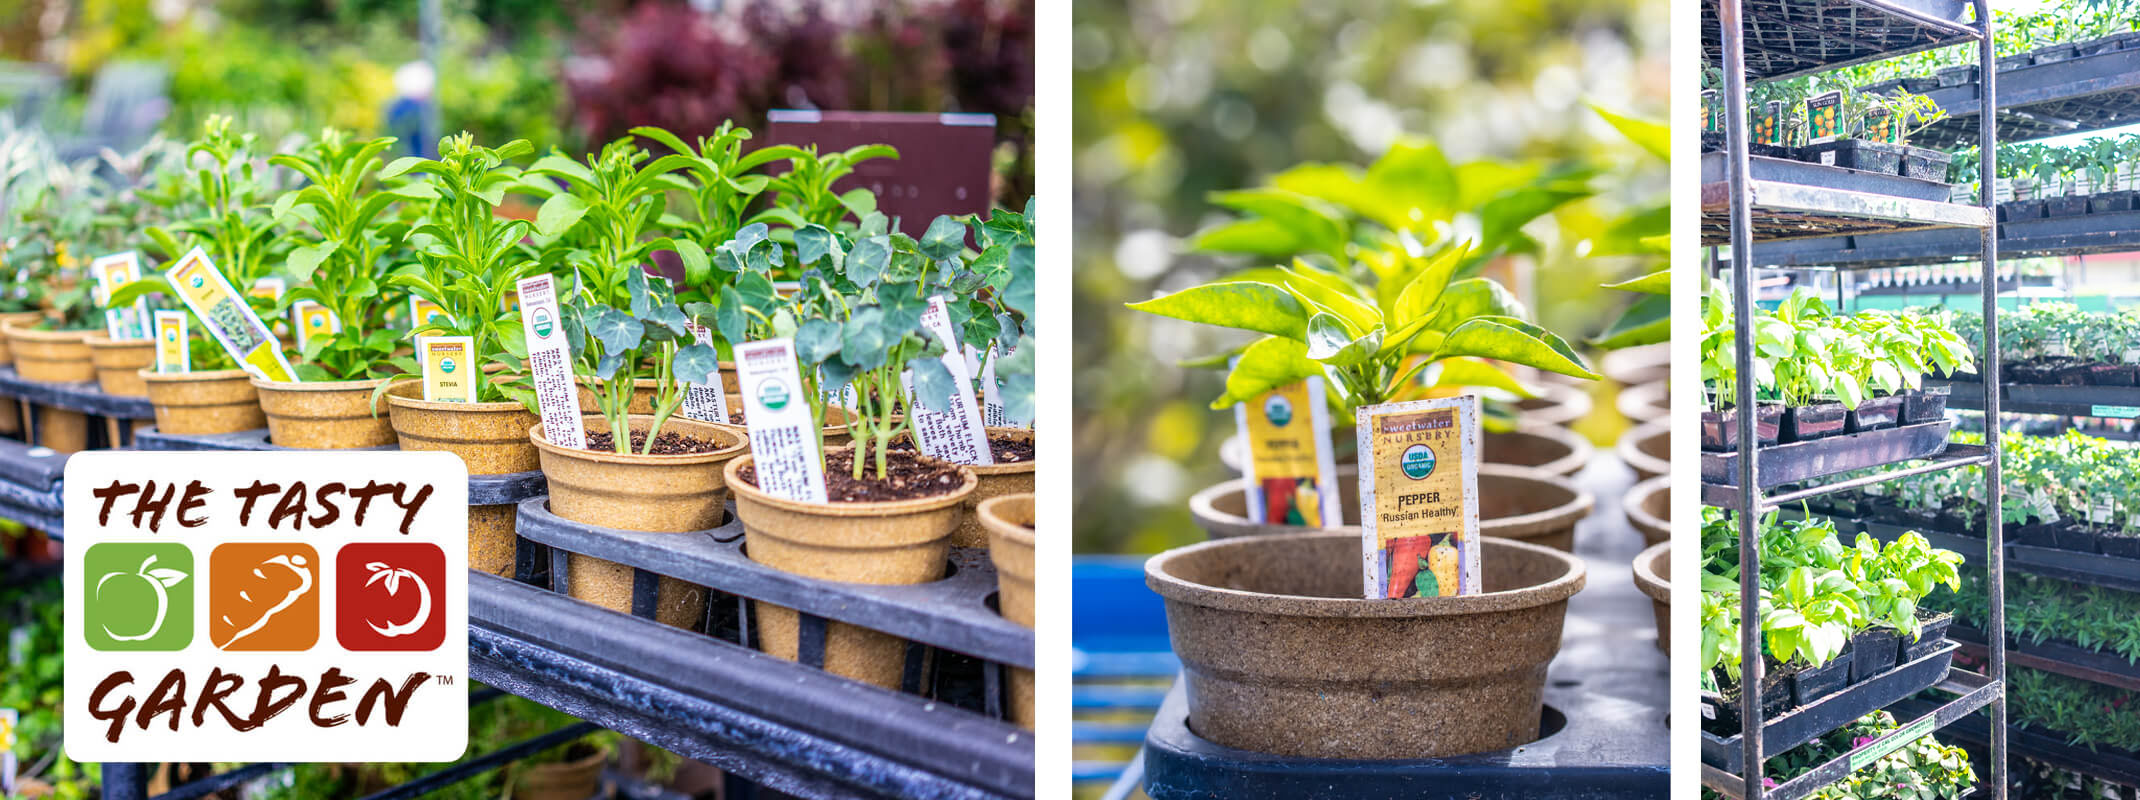 tasty garden edible plants on racks at garden center peppers and herbs 